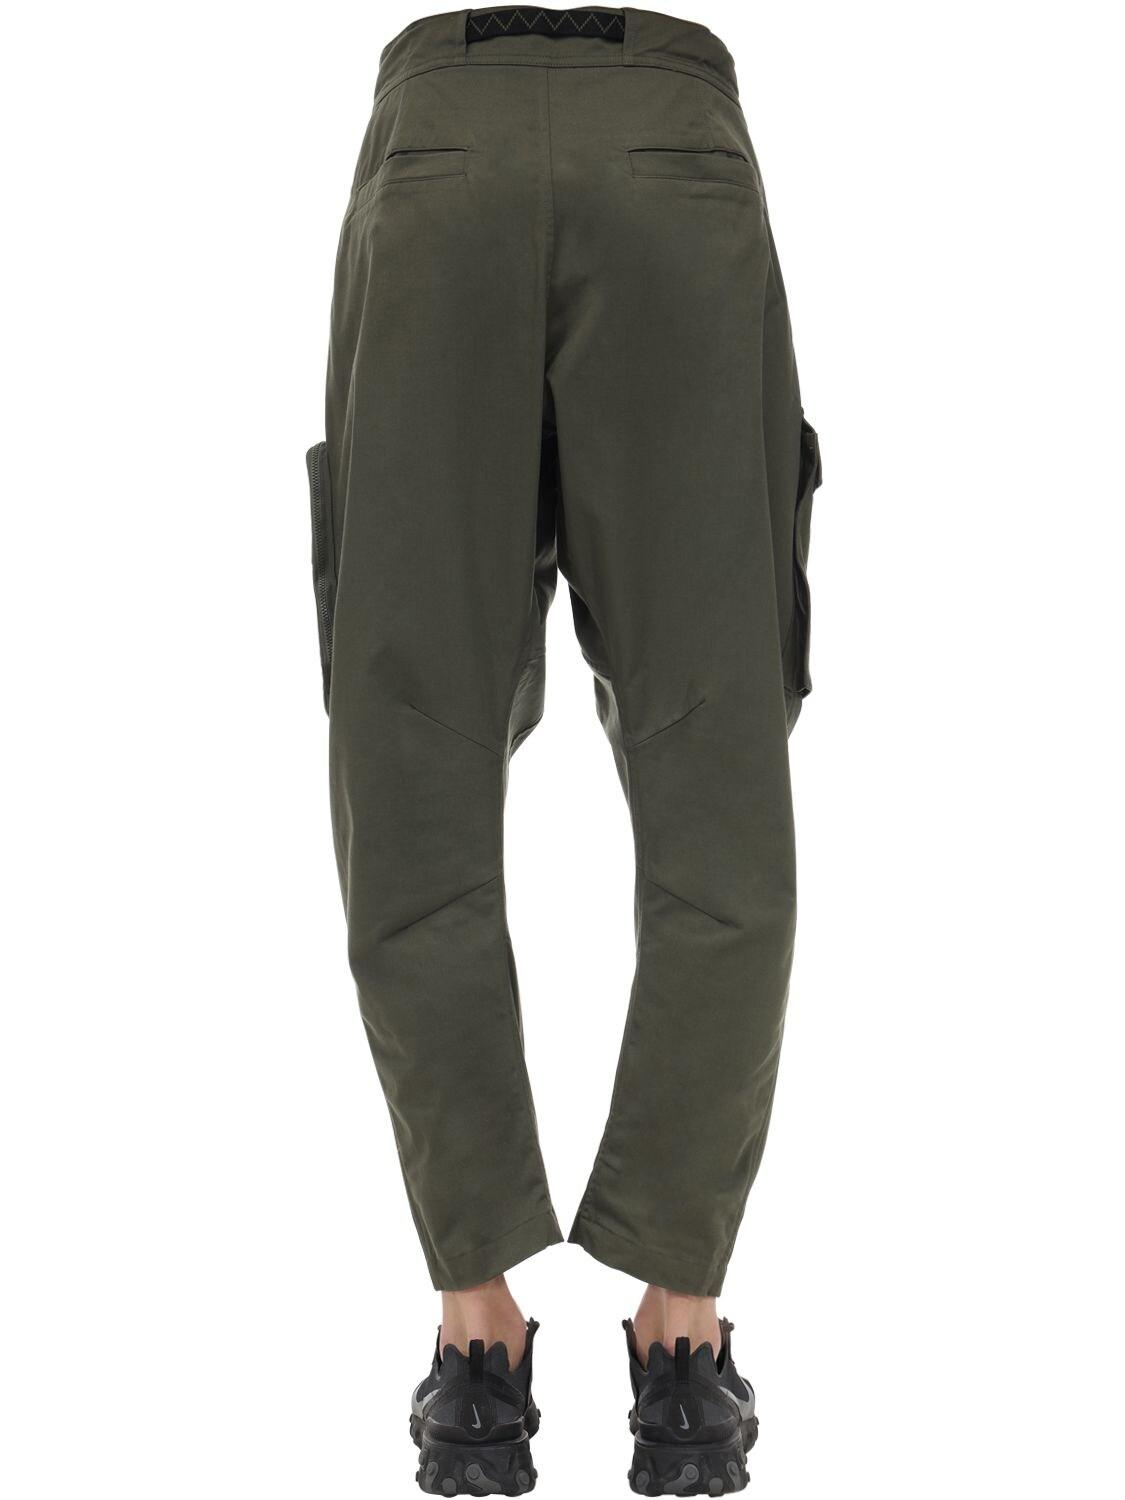 Nike Acg Cotton Blend Cargo Pants in Cargo Khaki (Green) for Men - Lyst